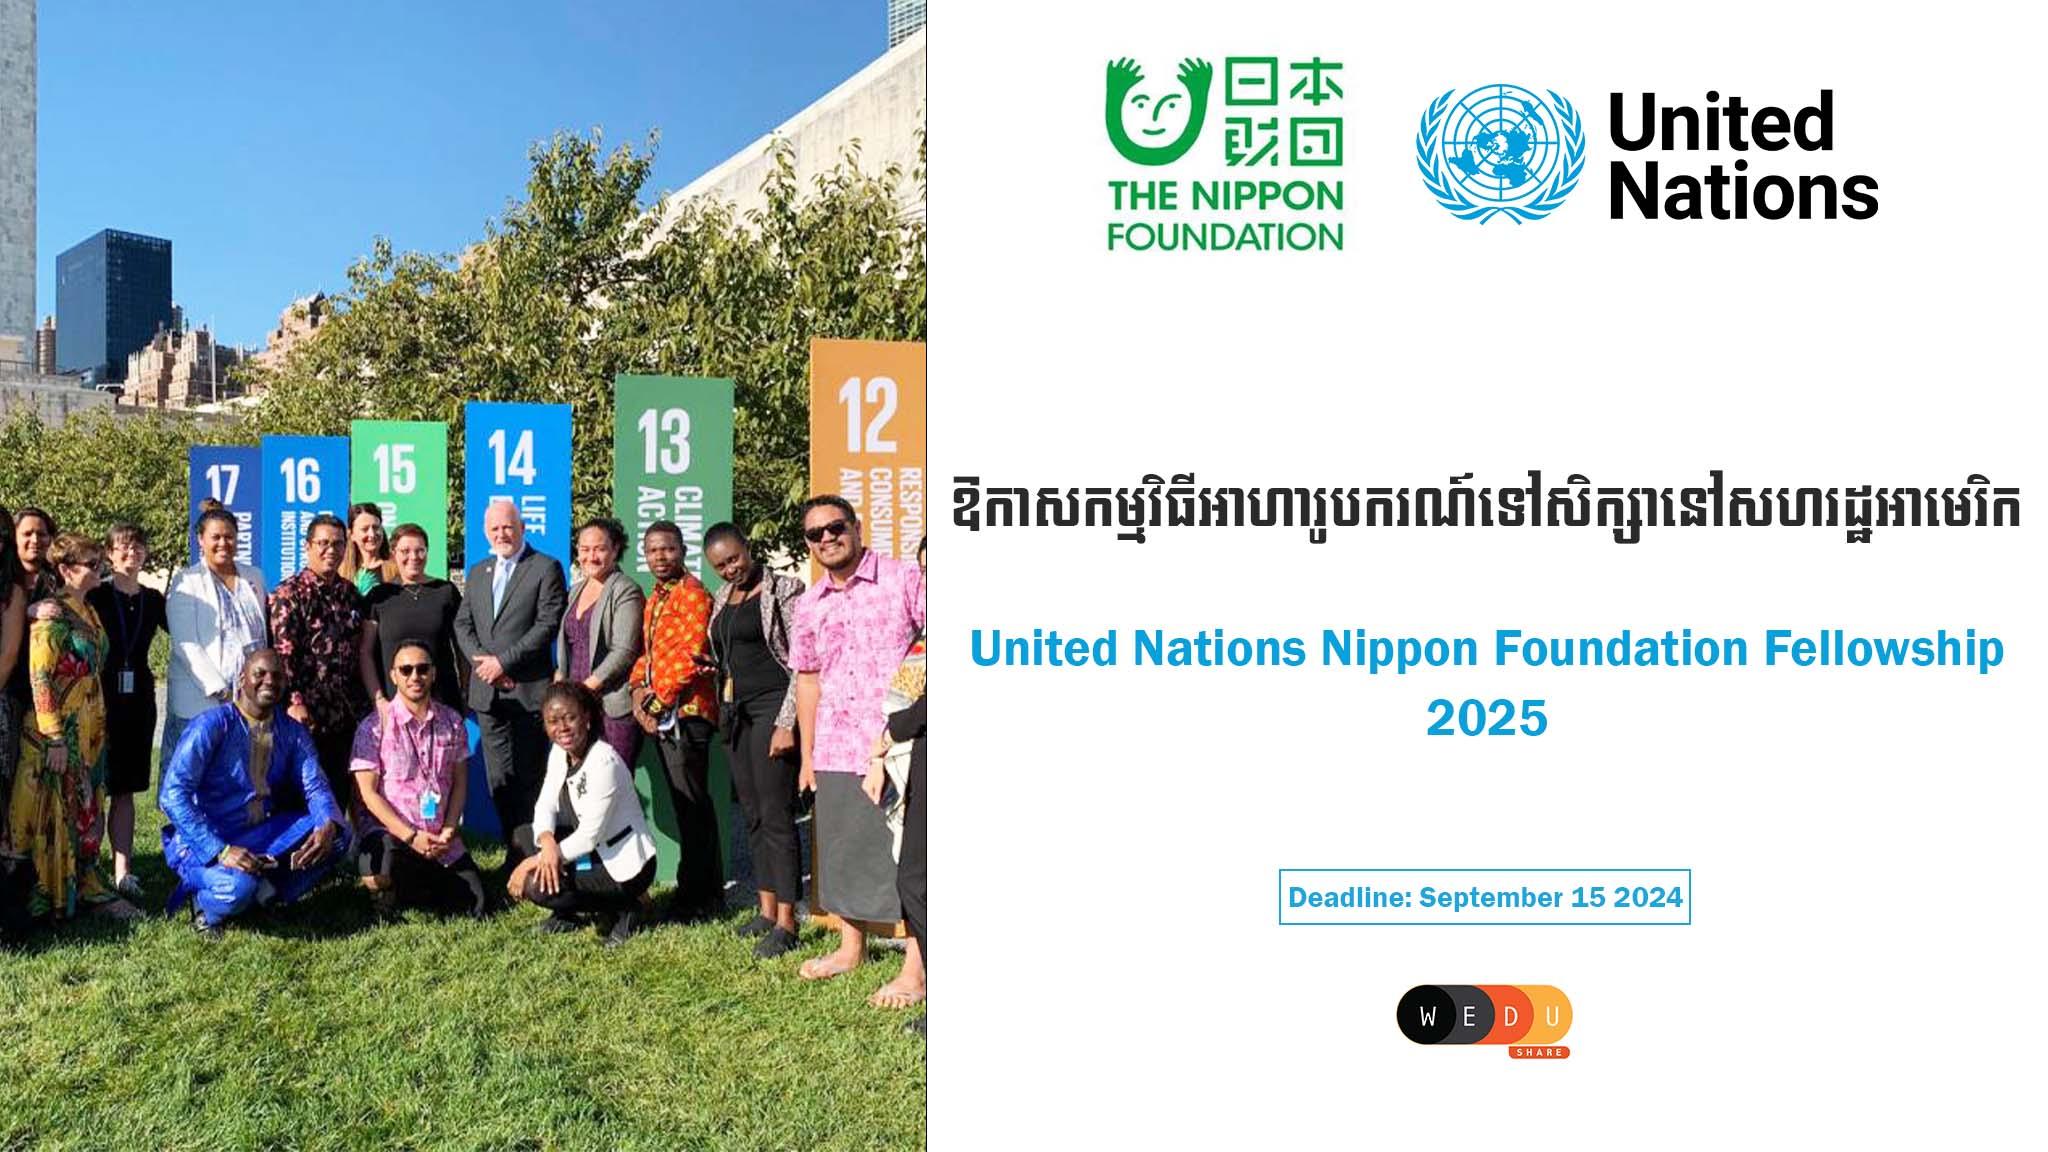 United Nations Nippon Foundation Fellowship 2025